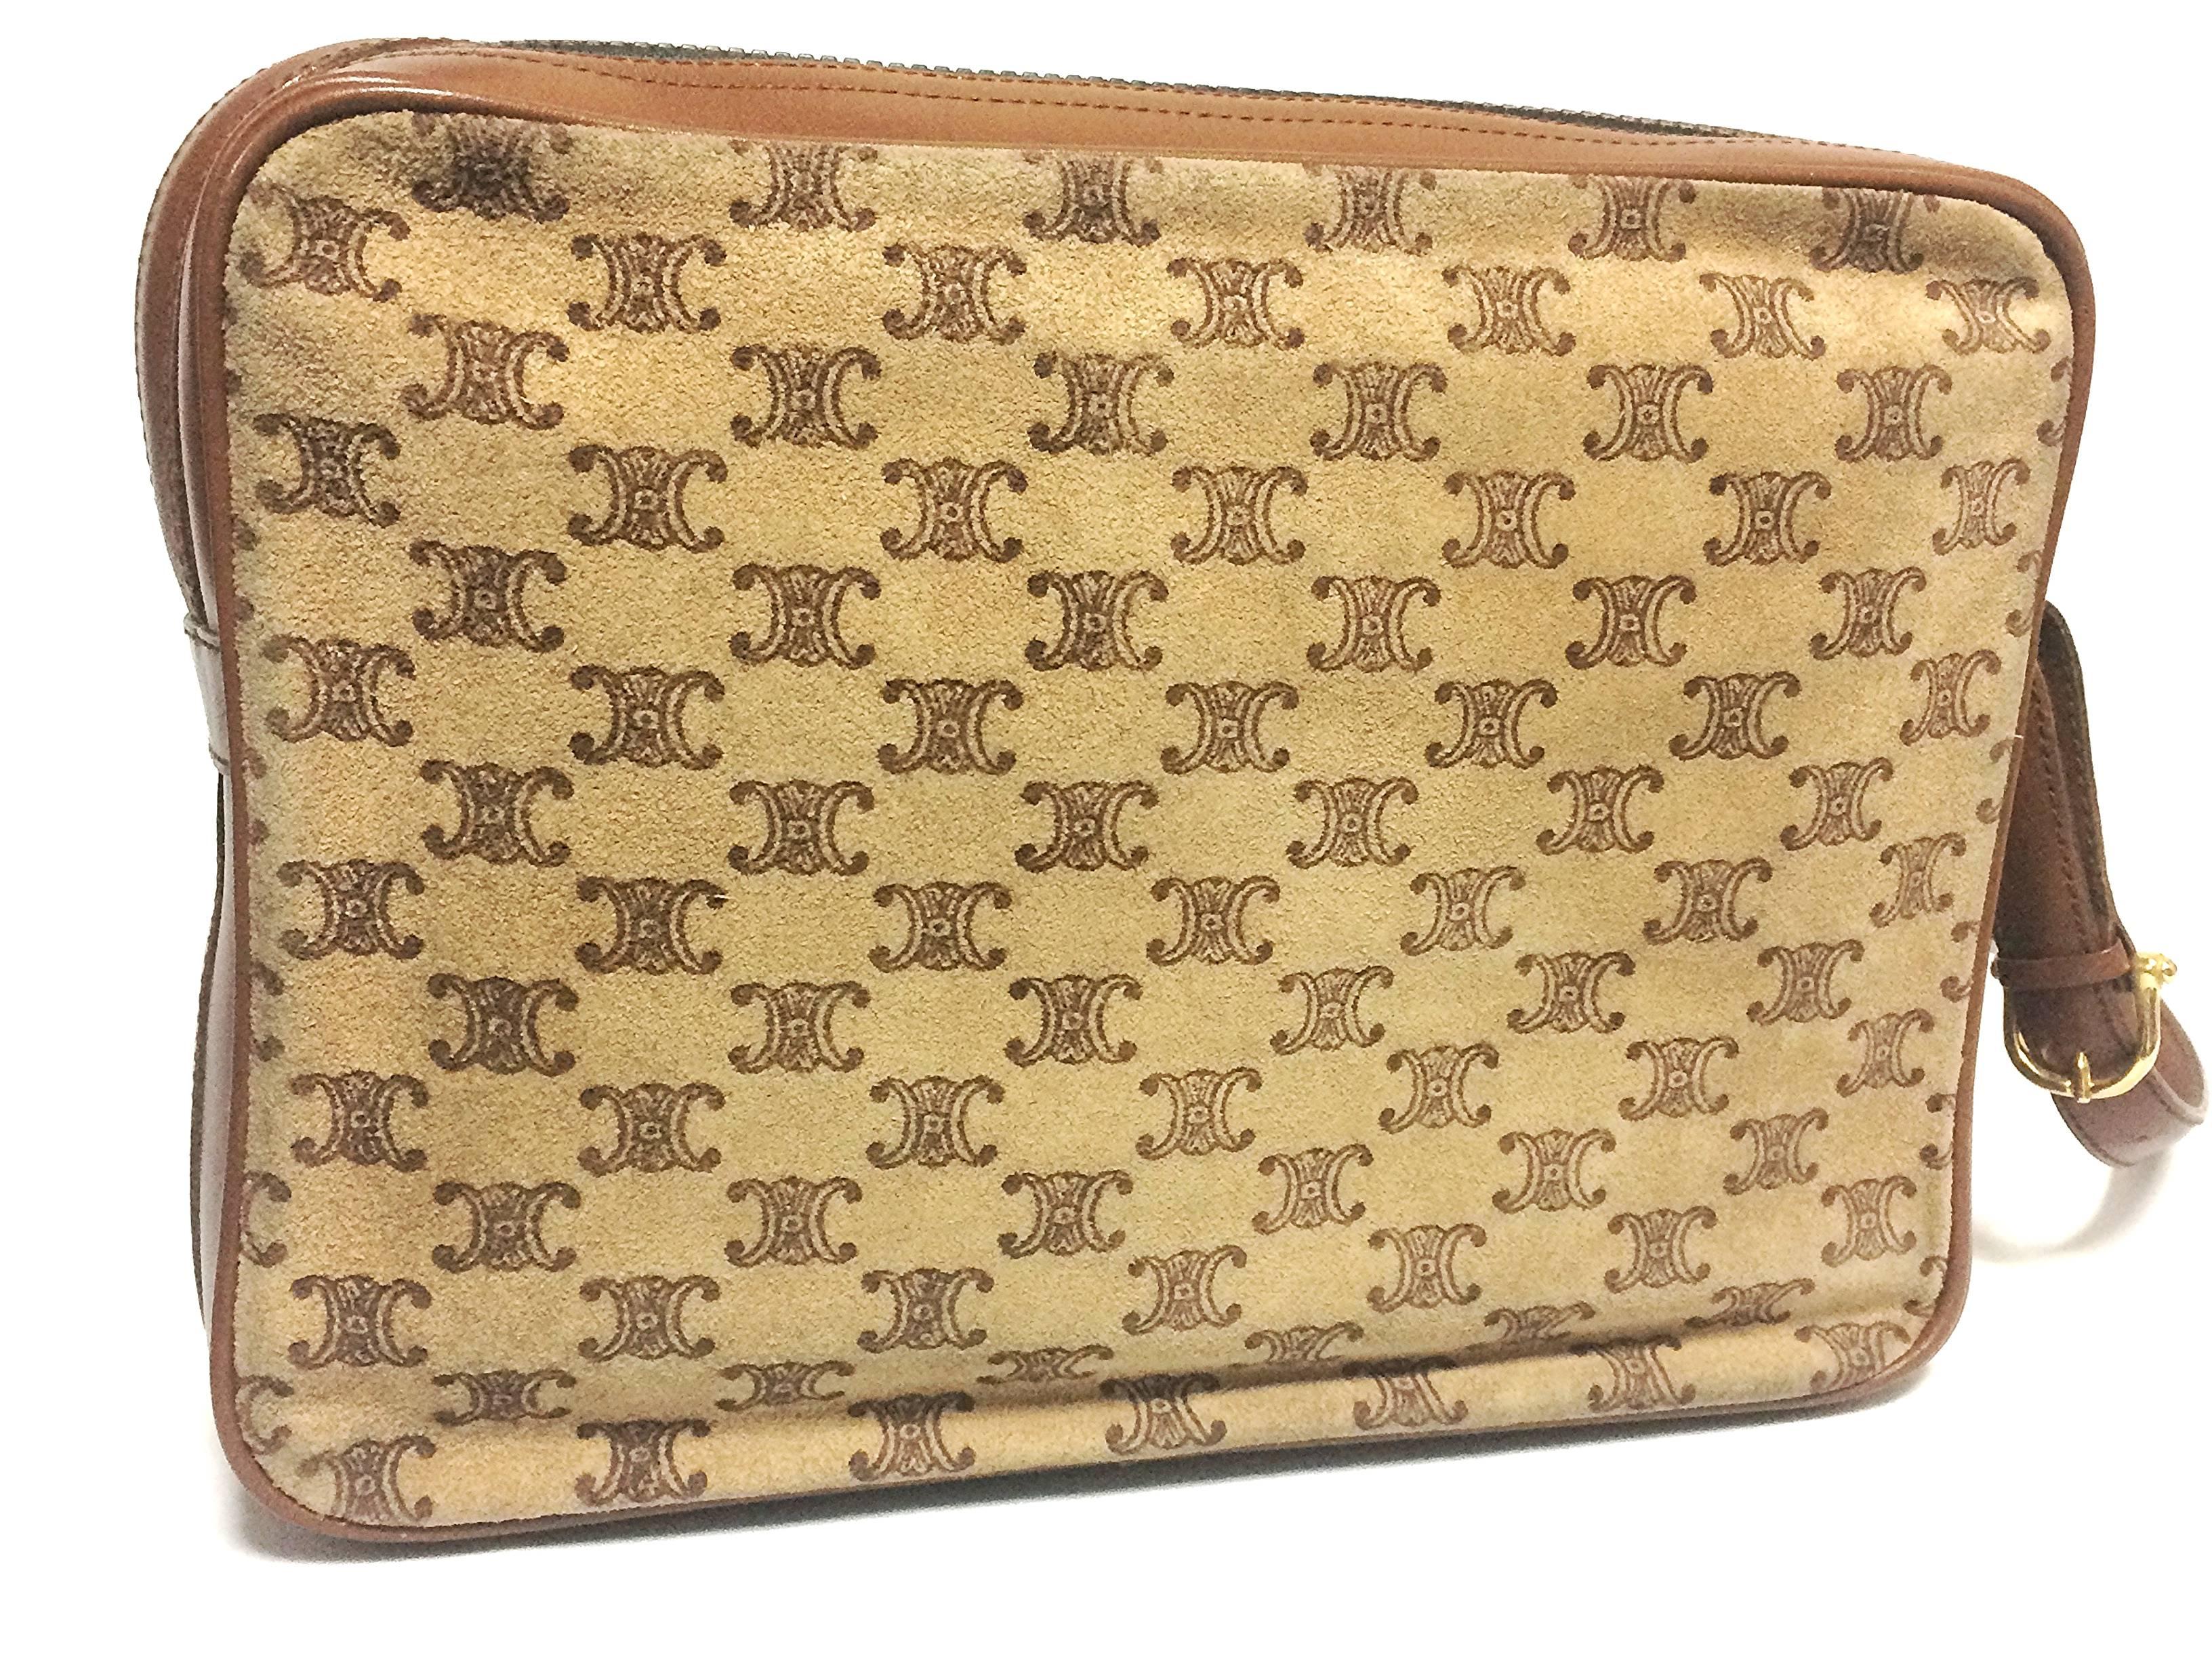 Vintage Celine tanned brown suede leather in macadam blason pattern shoulder bag For Sale 1